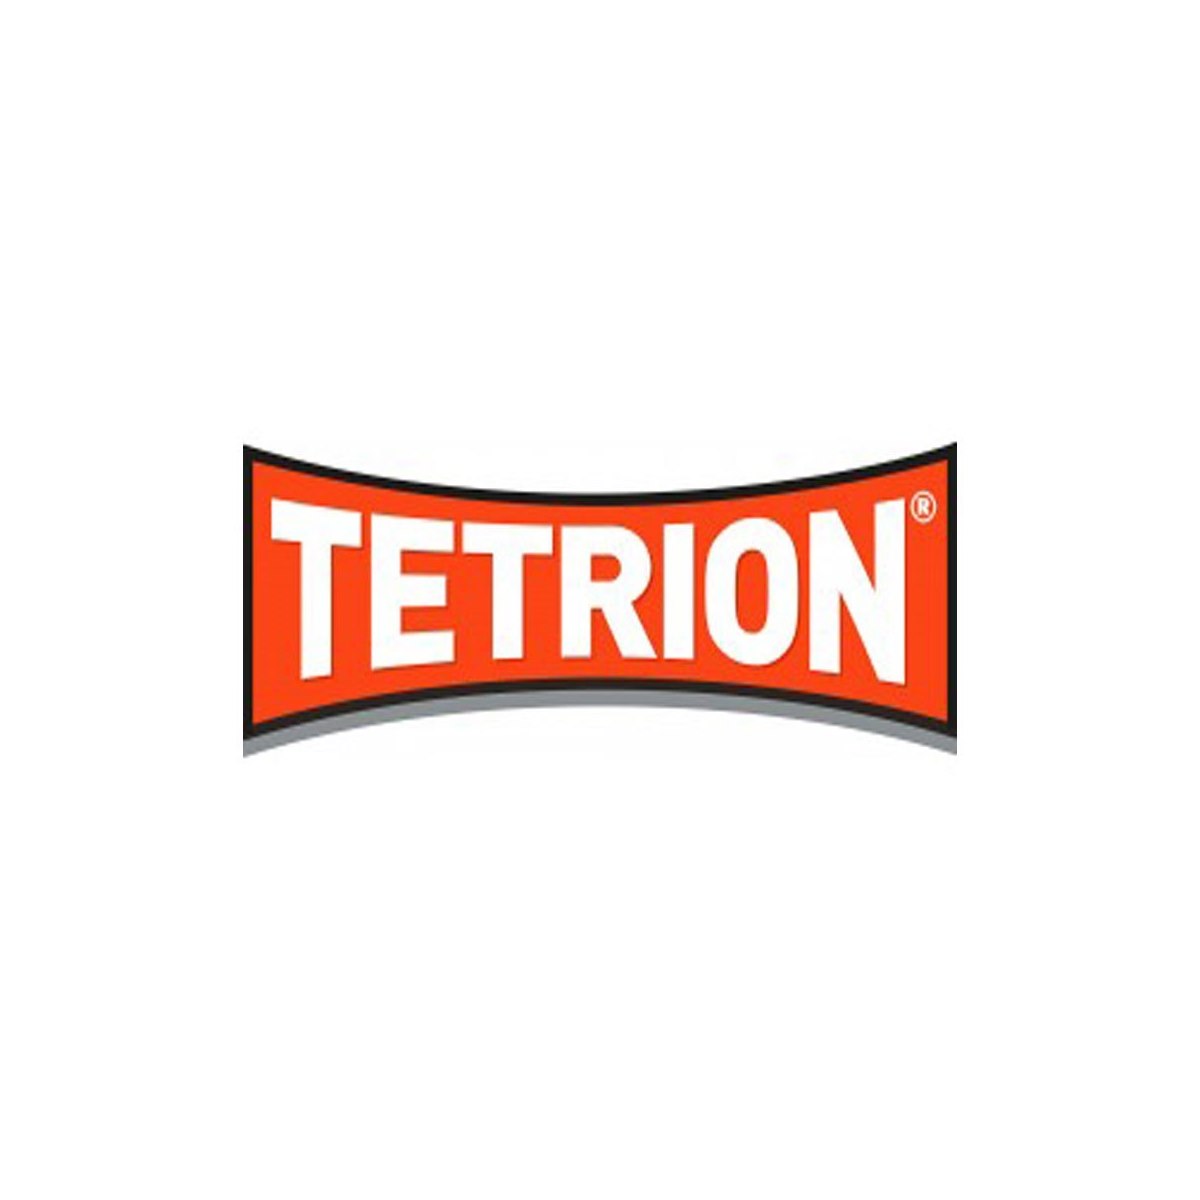 Where to buy Tetrion Fix a Leak